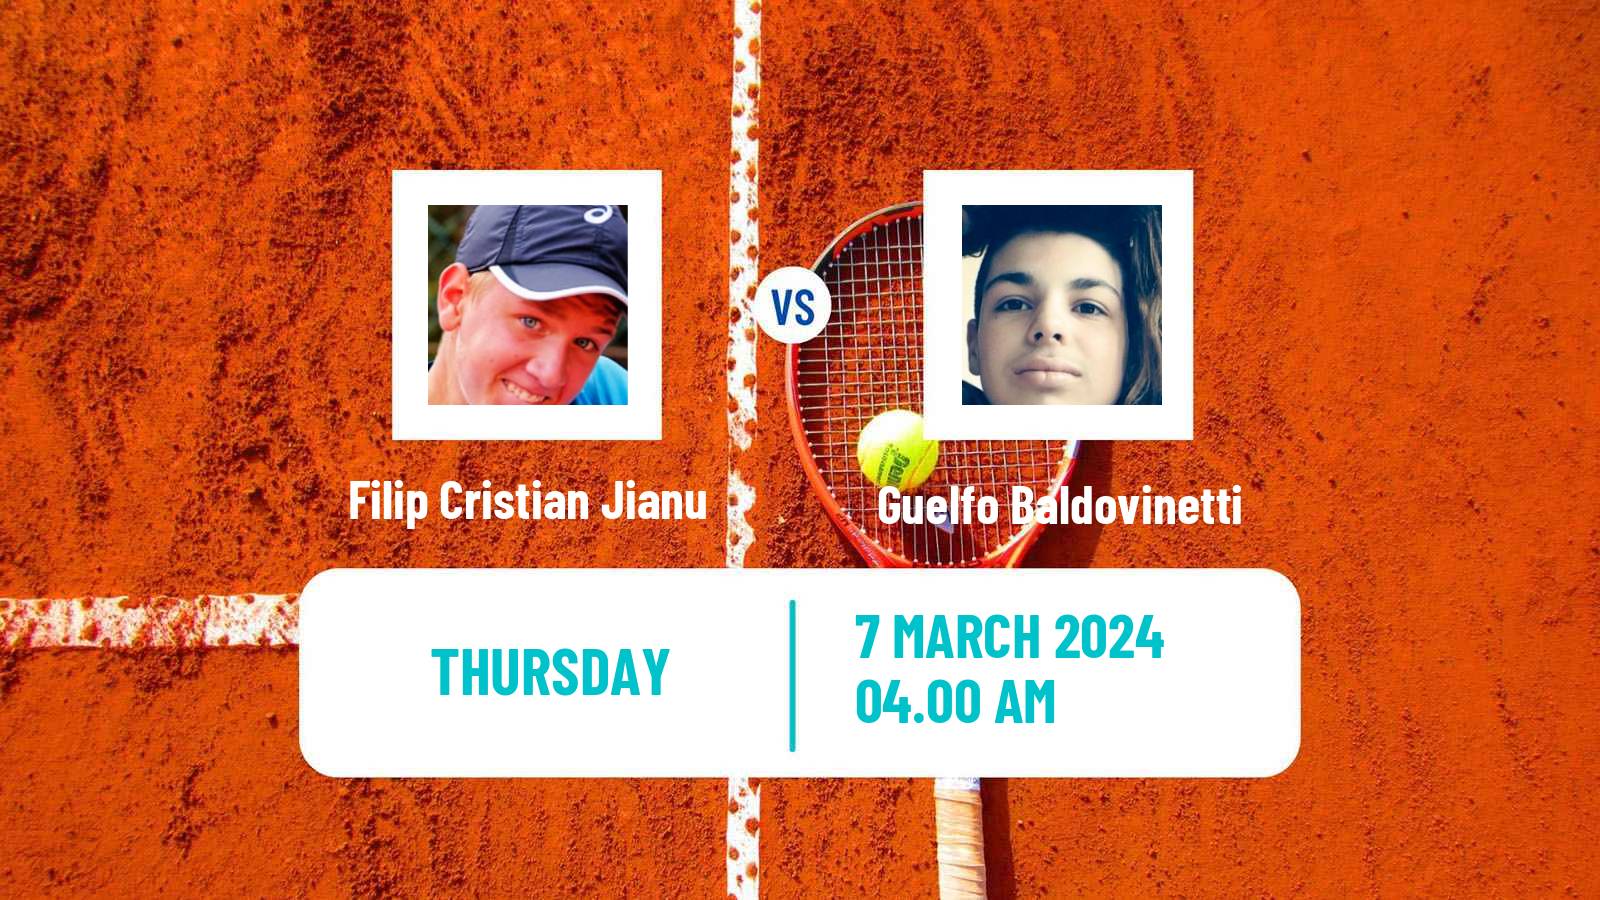 Tennis ITF M15 Kish Island 4 Men Filip Cristian Jianu - Guelfo Baldovinetti